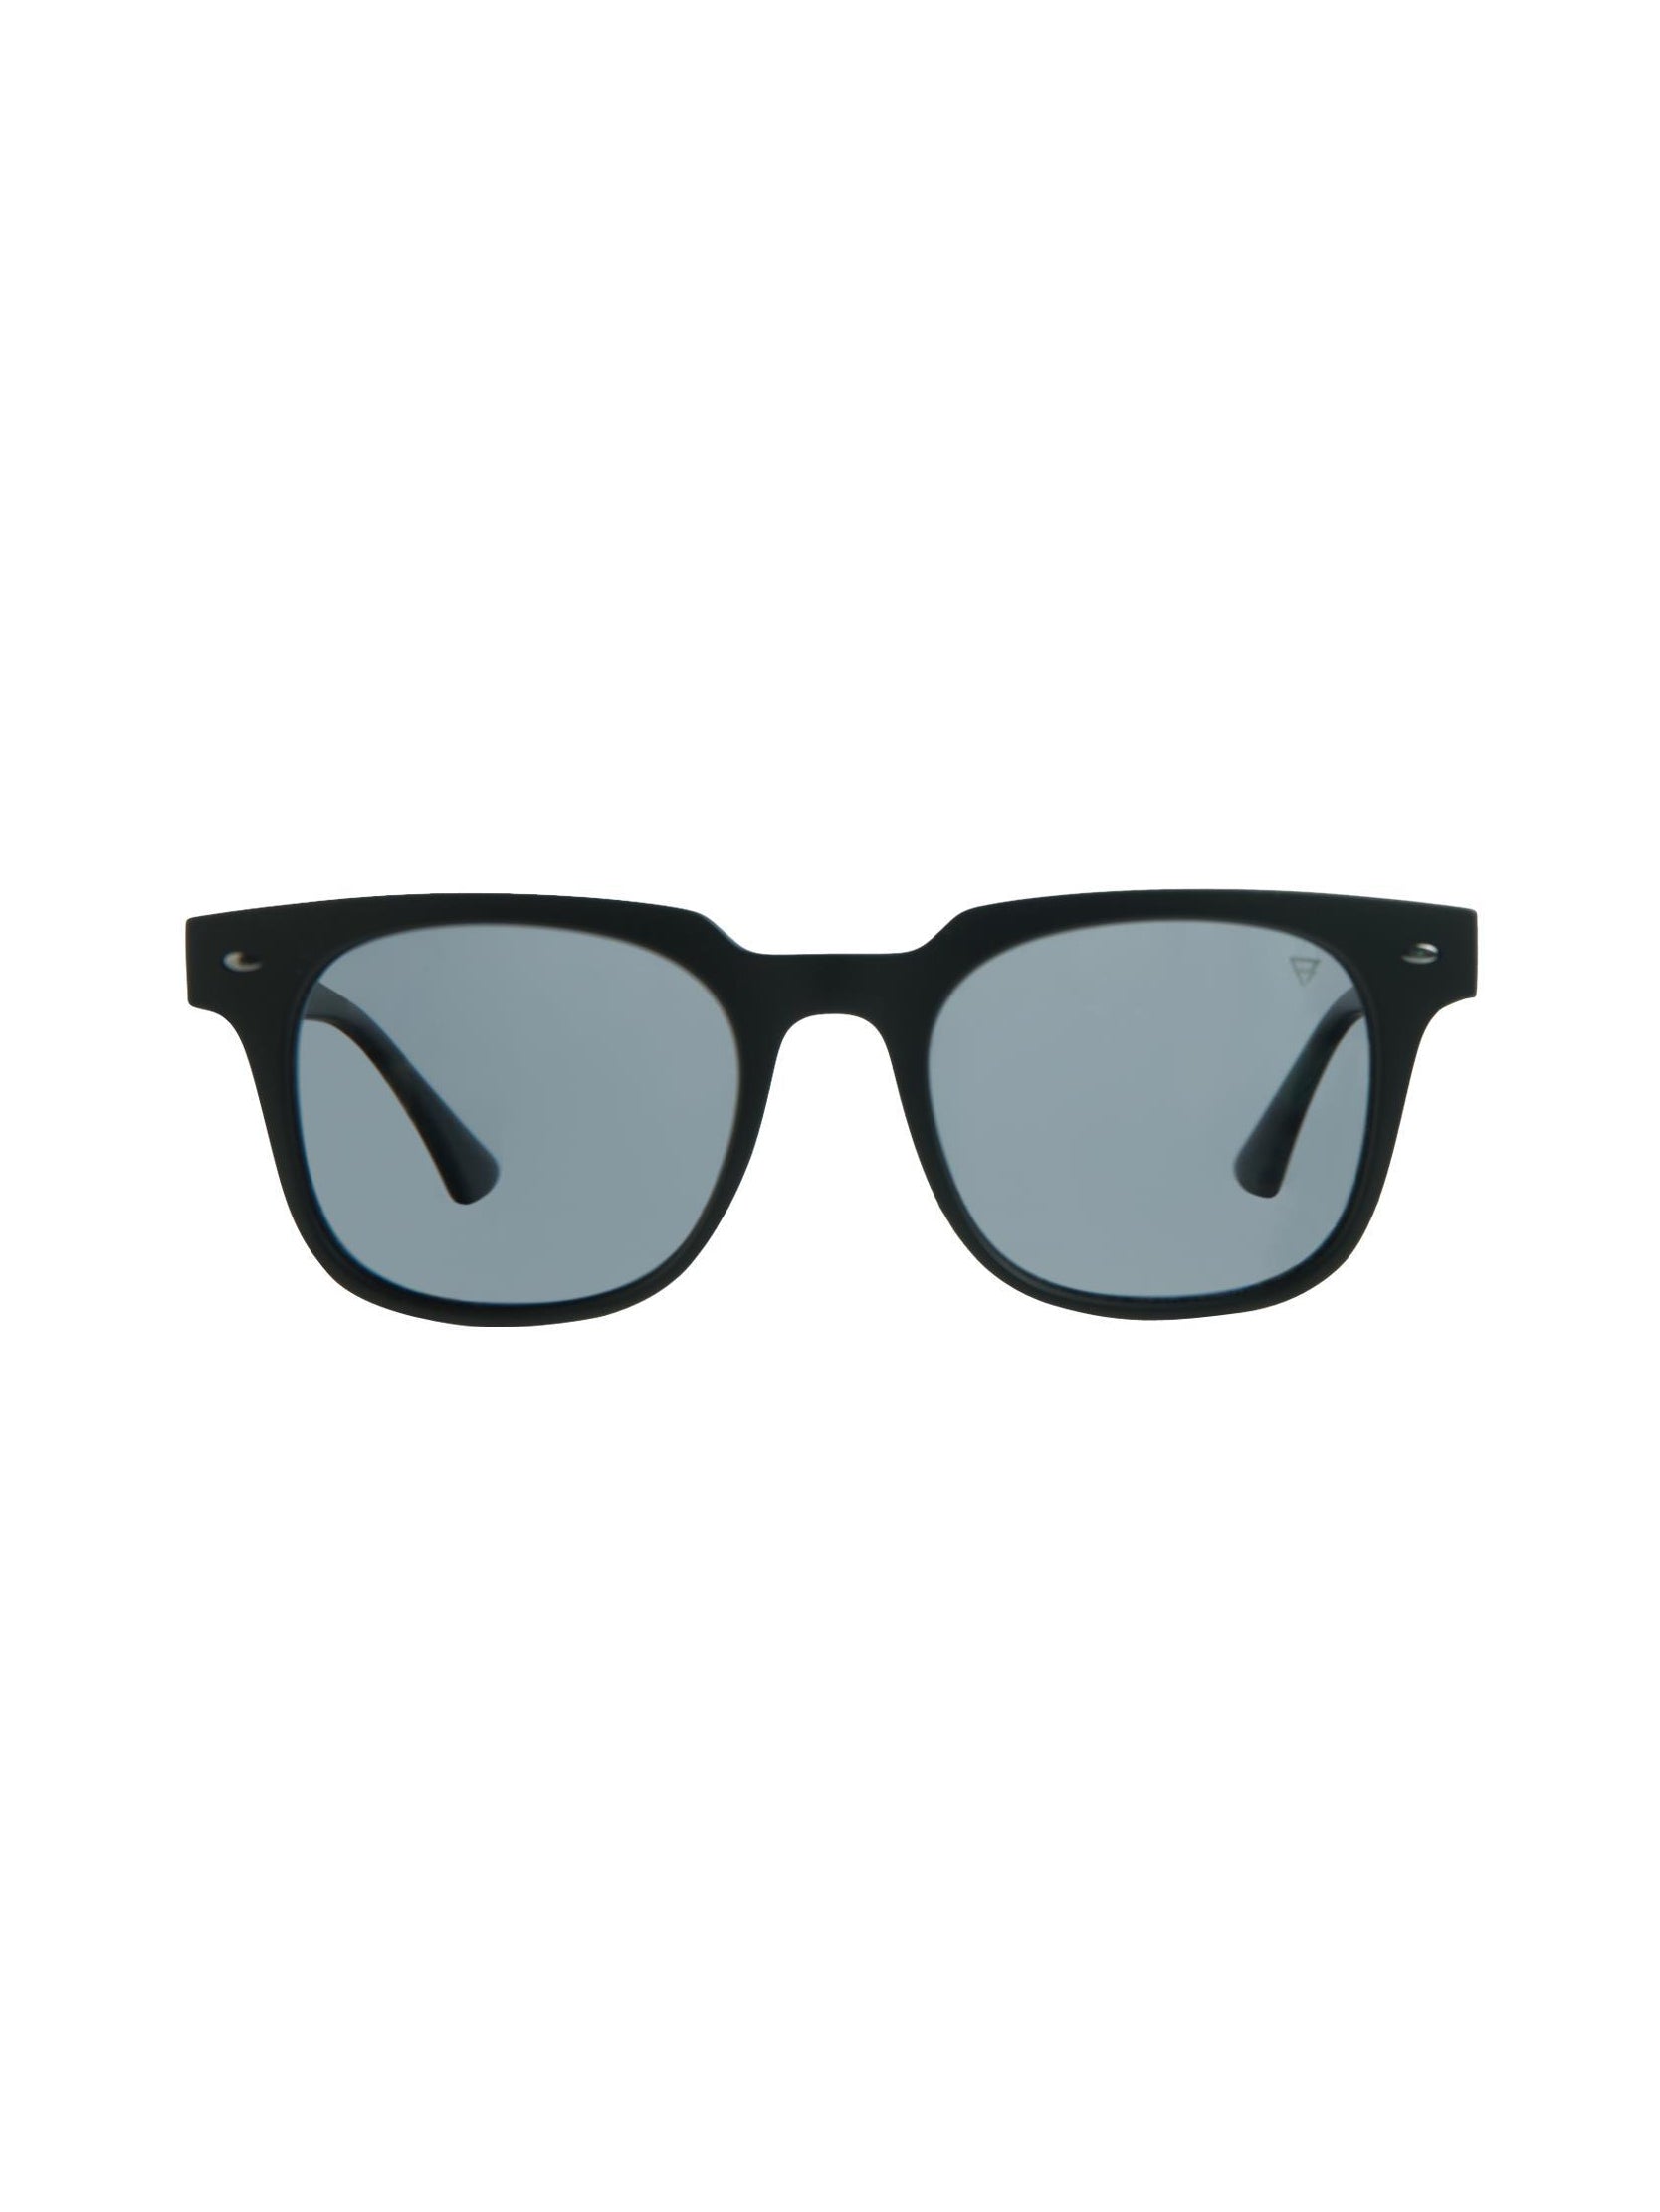 Kerio-2 Sunglasses | Black